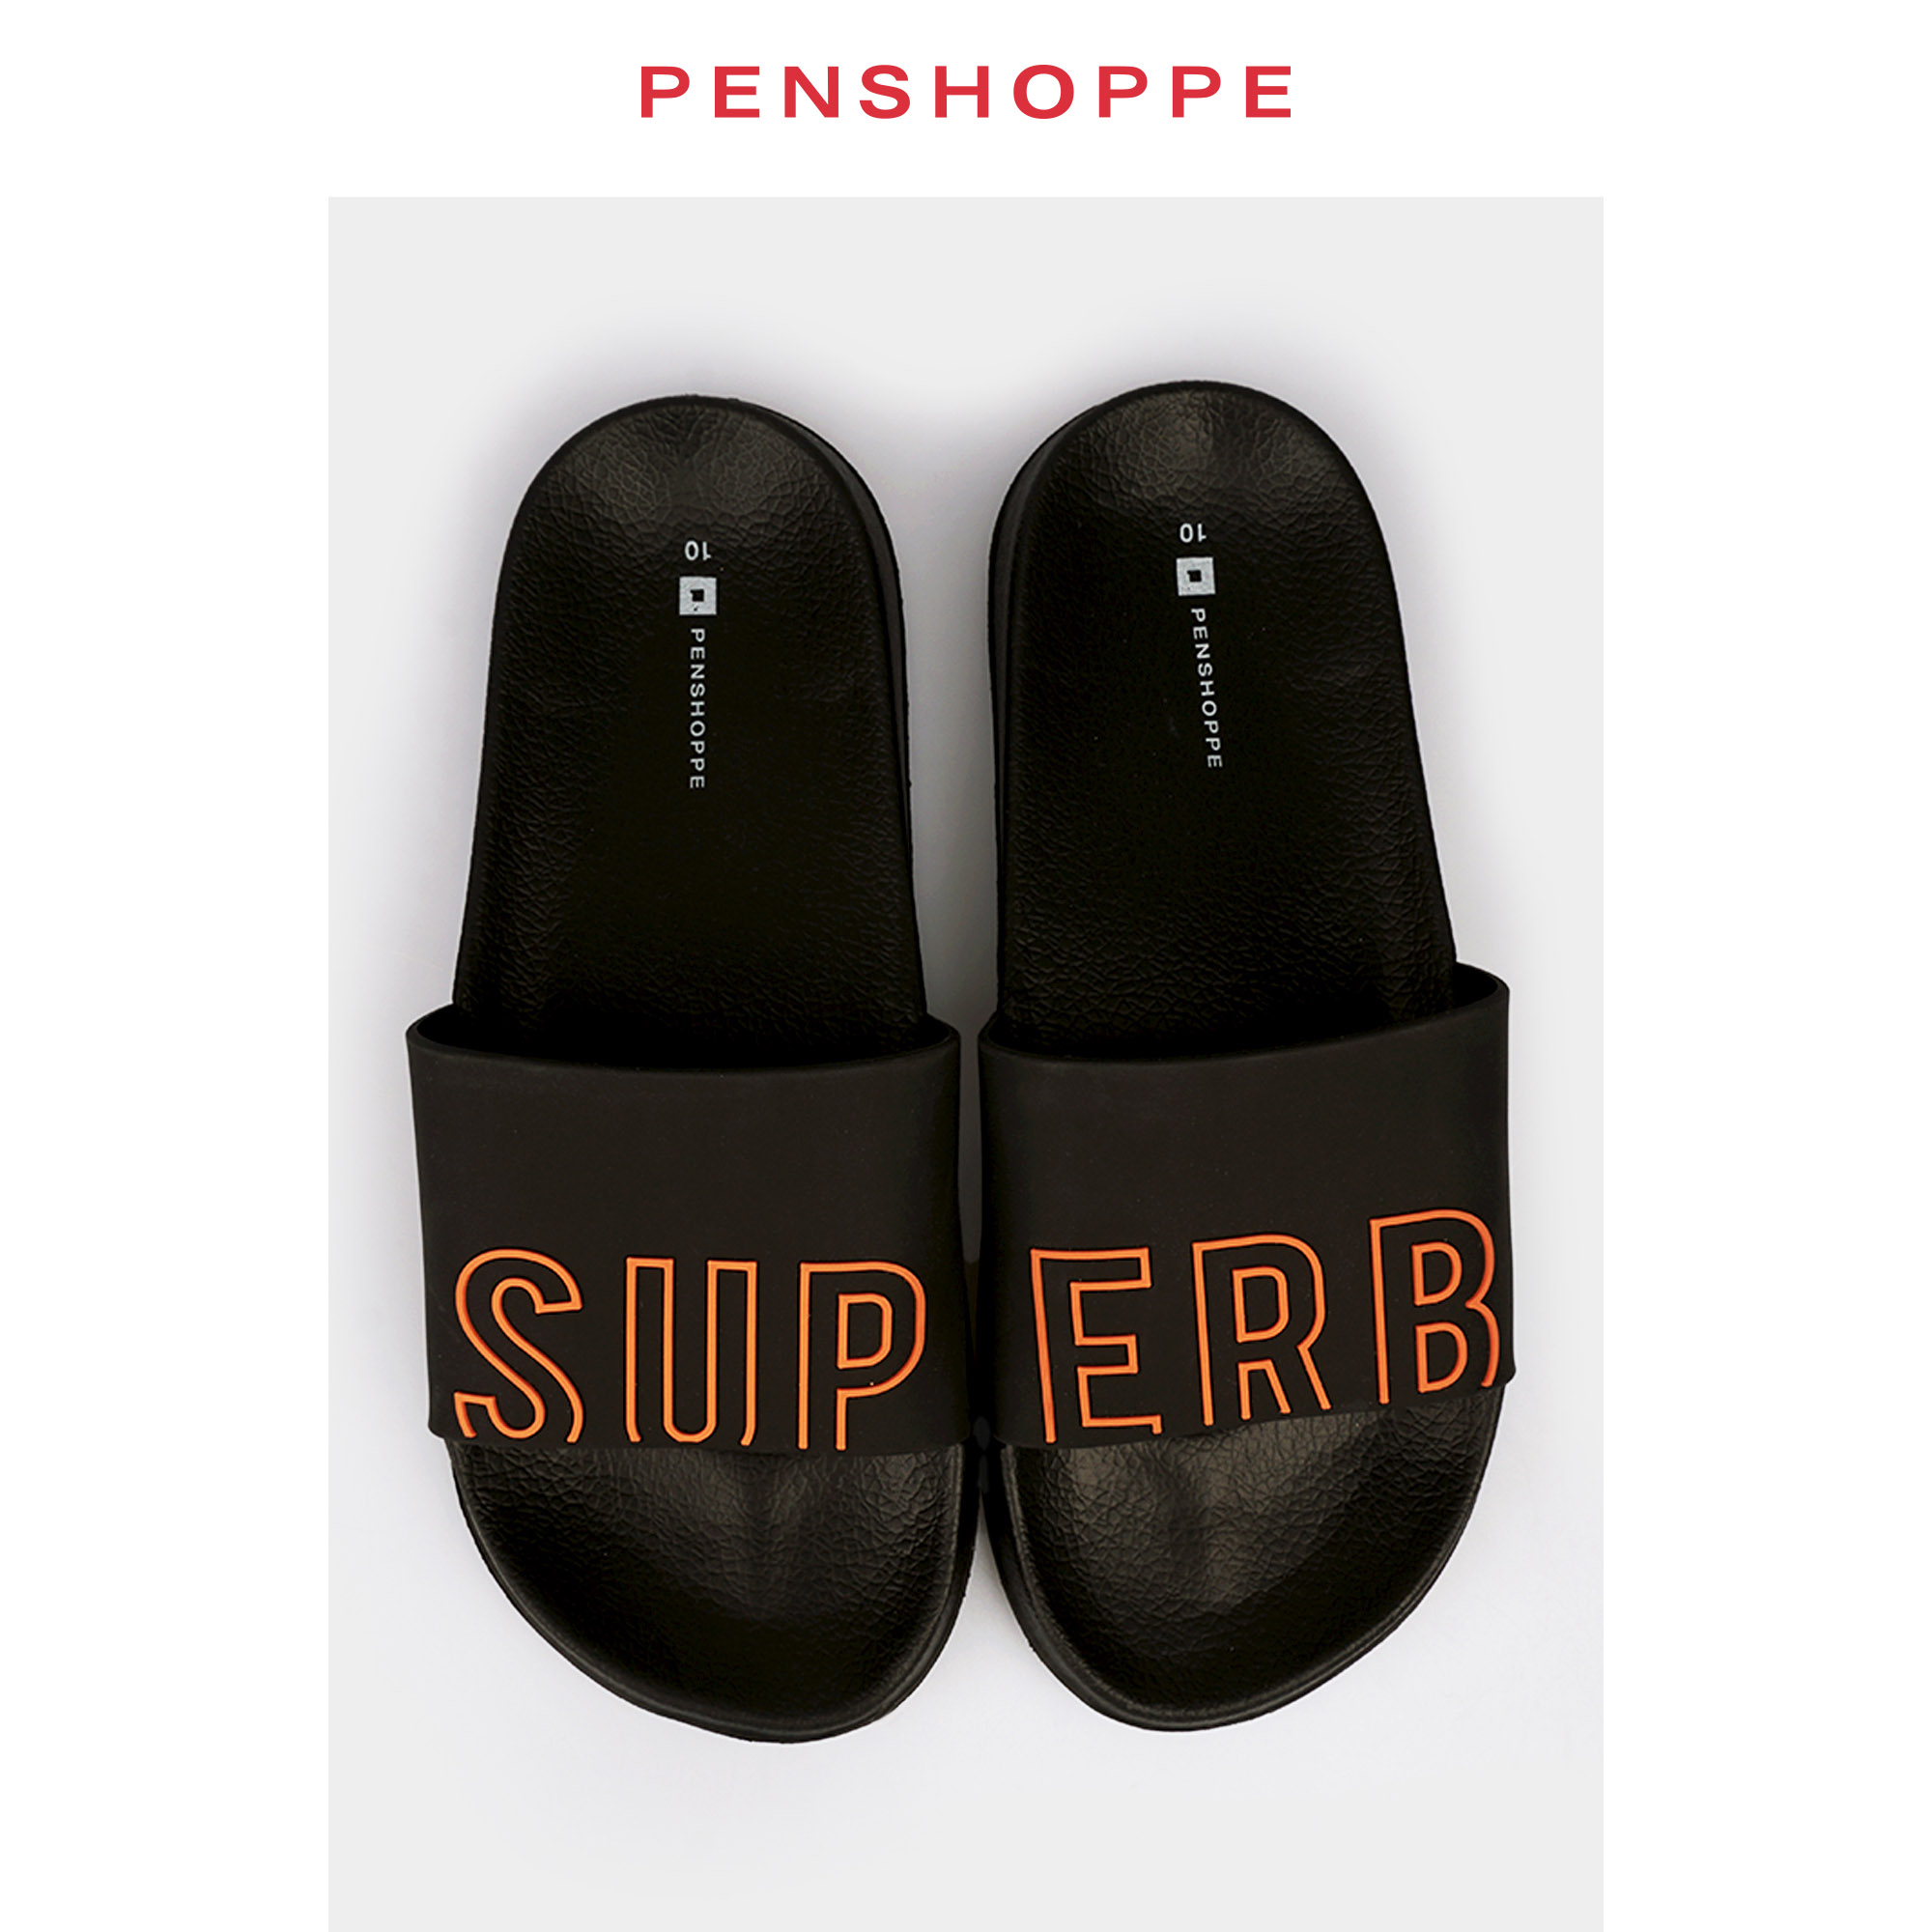 penshoppe slippers for male